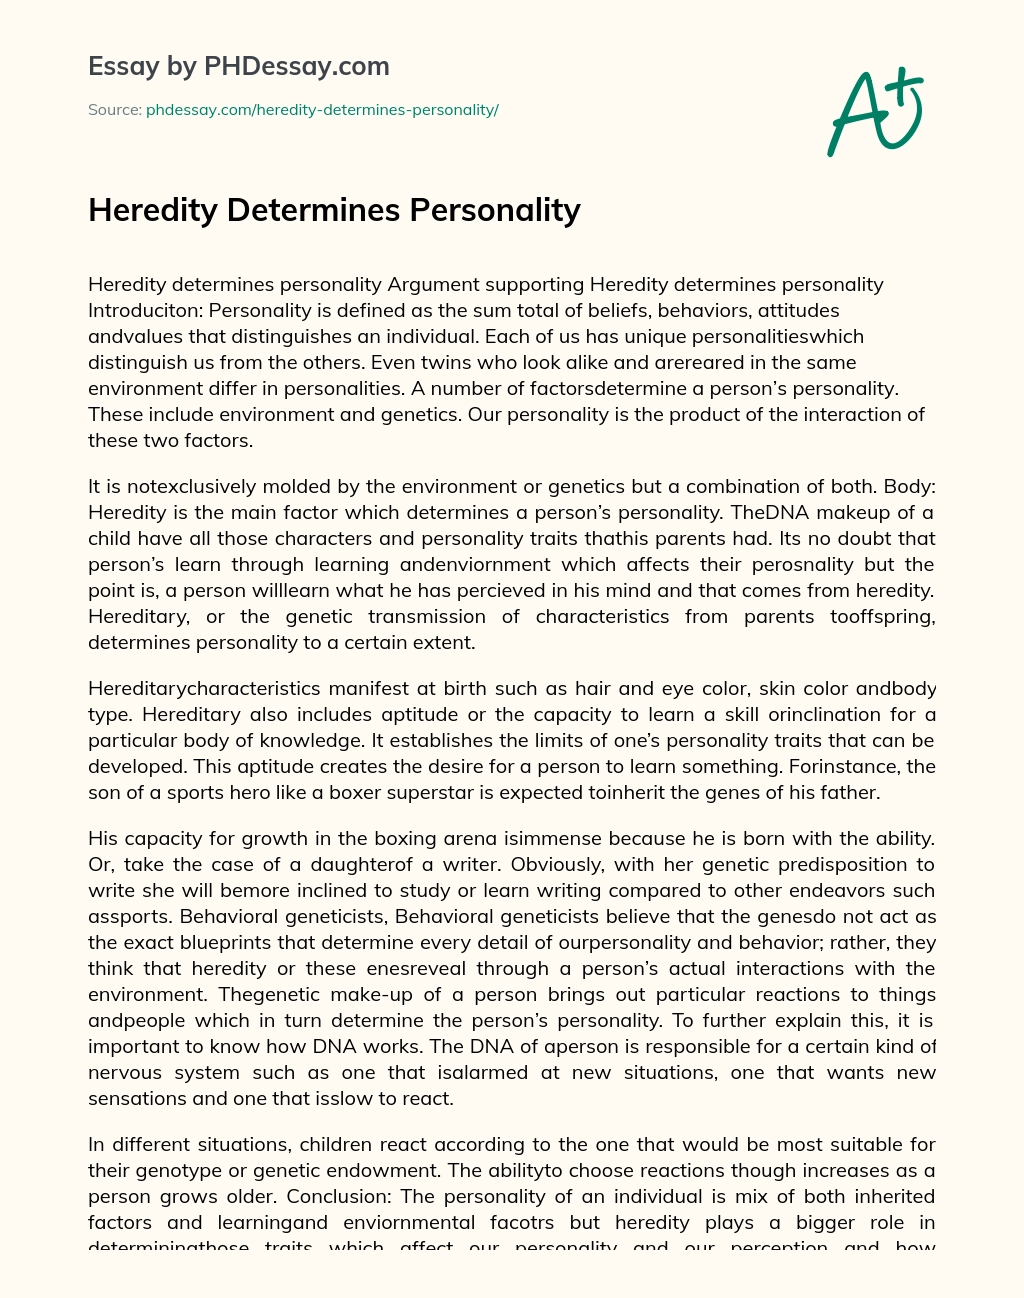 Heredity Determines Personality essay